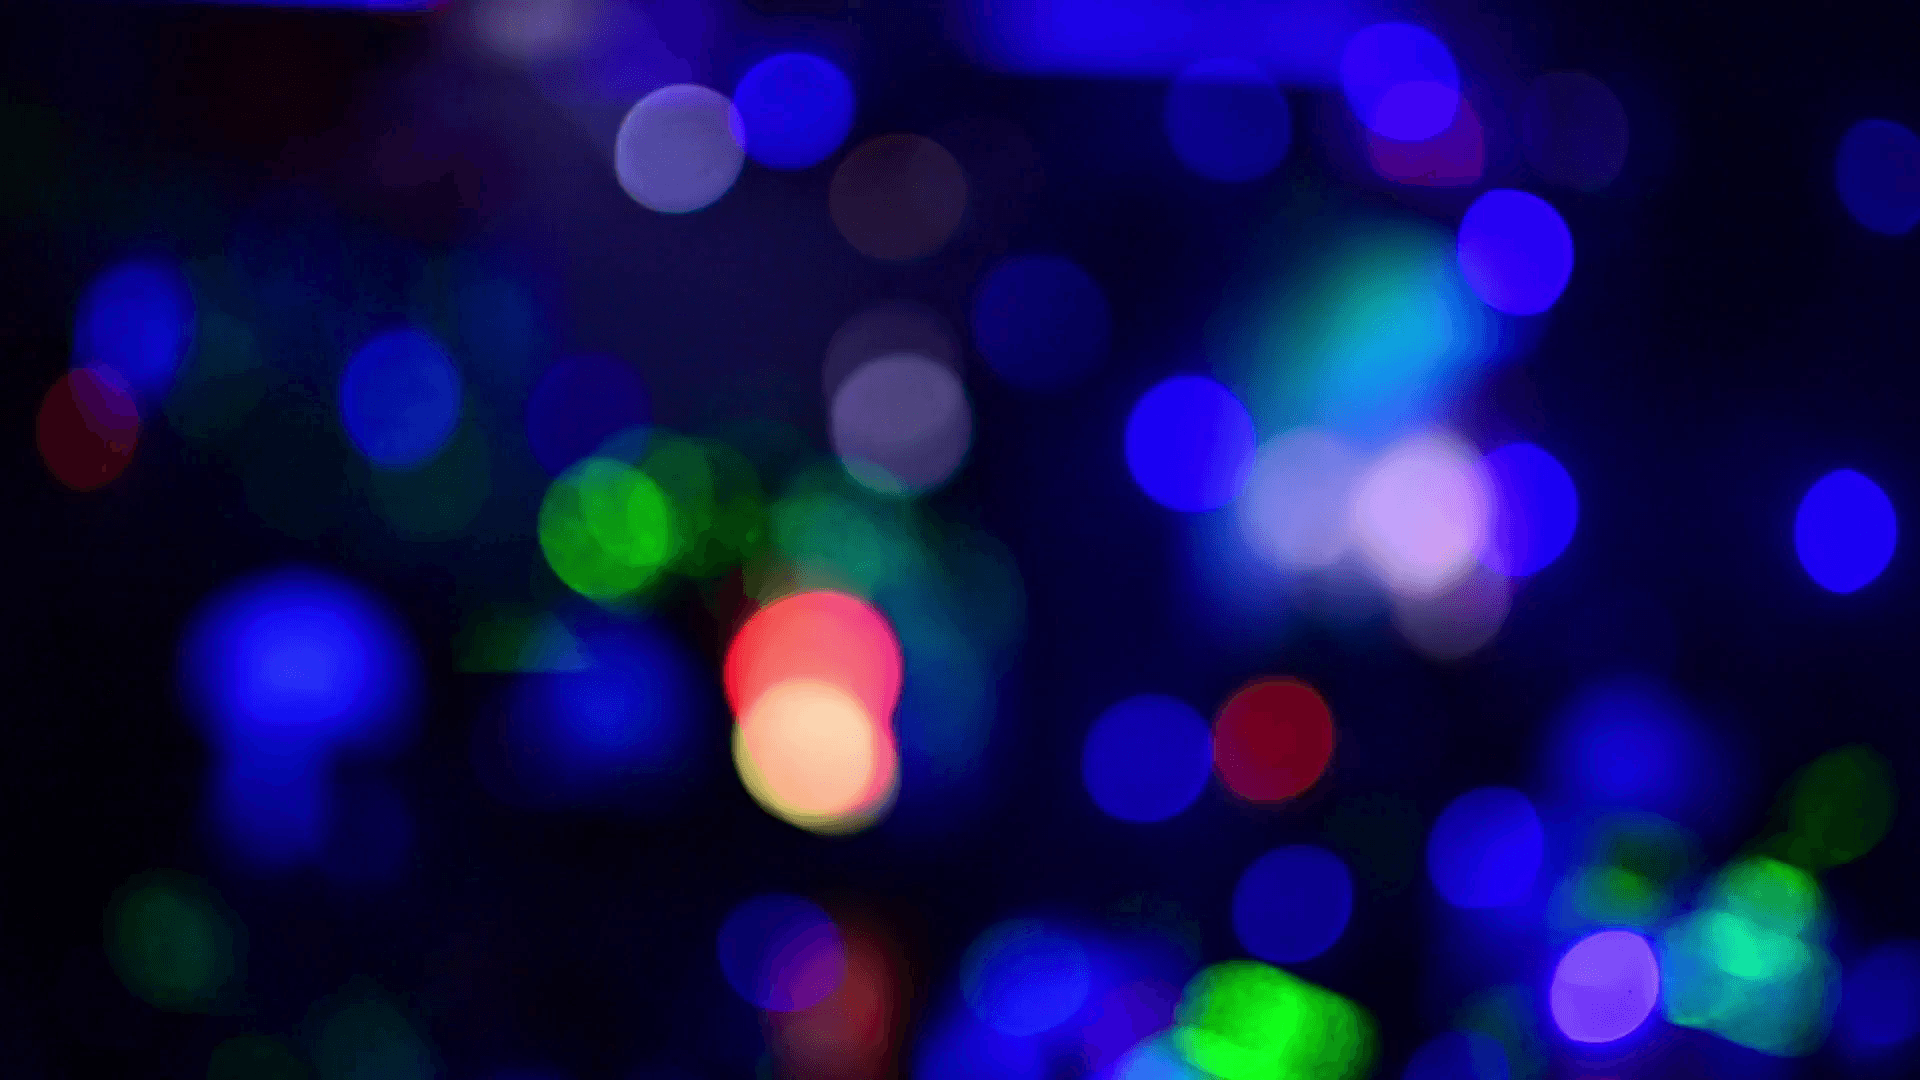 Background of multicolored blurred round light glare. Disco lights